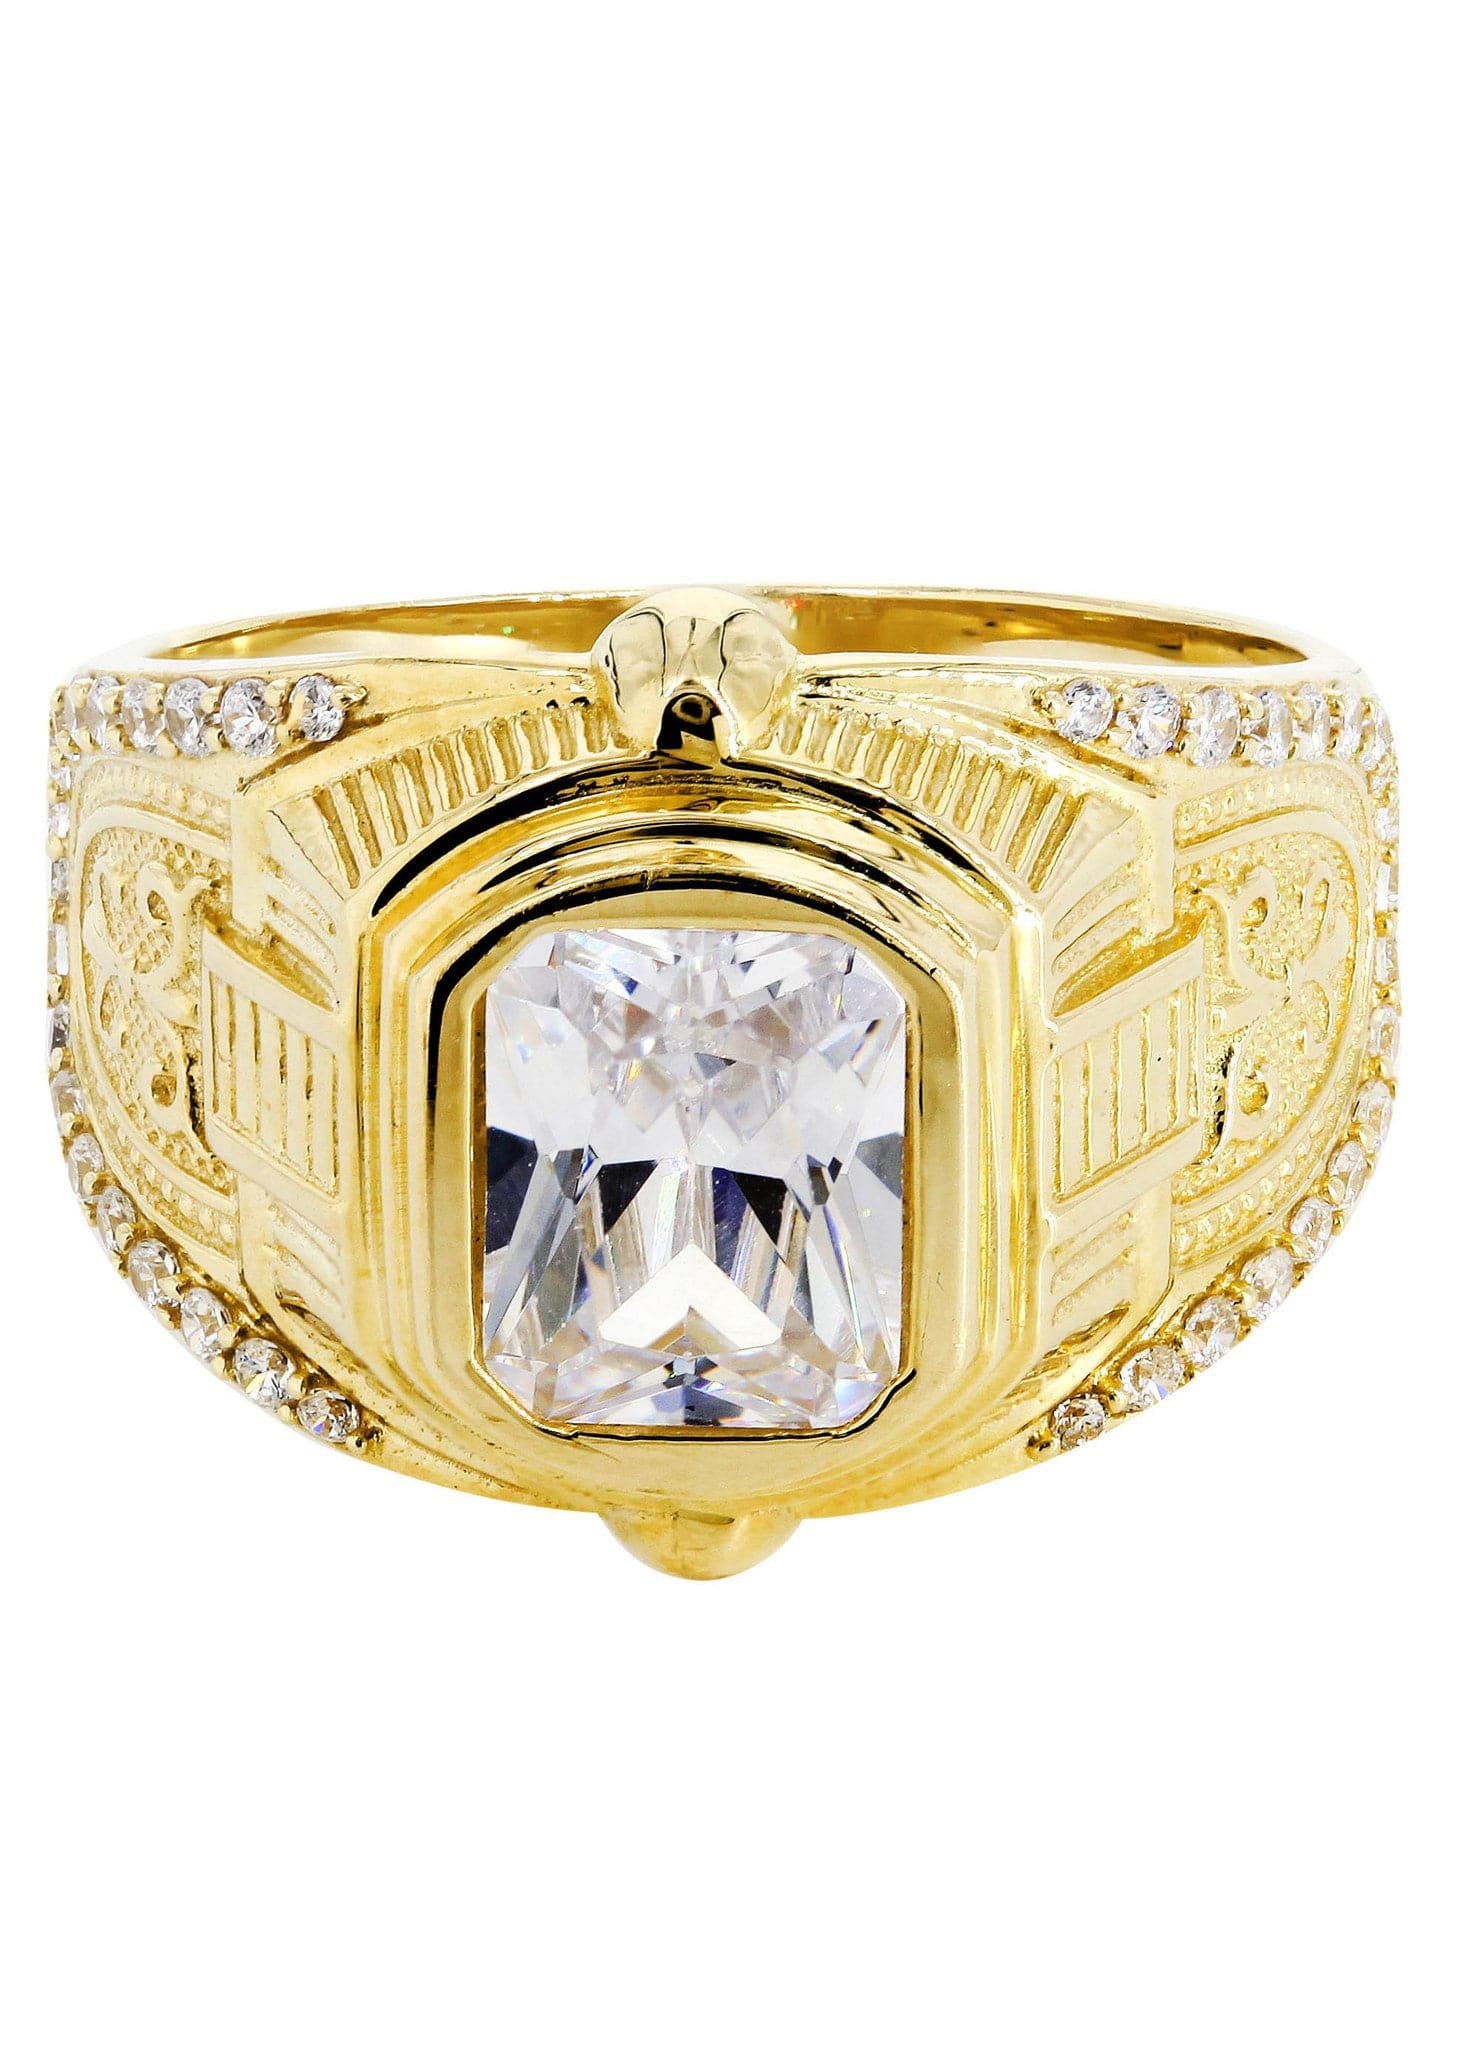 Buy Senco Gold Diamond Rings at Best Prices Online at Tata CLiQ